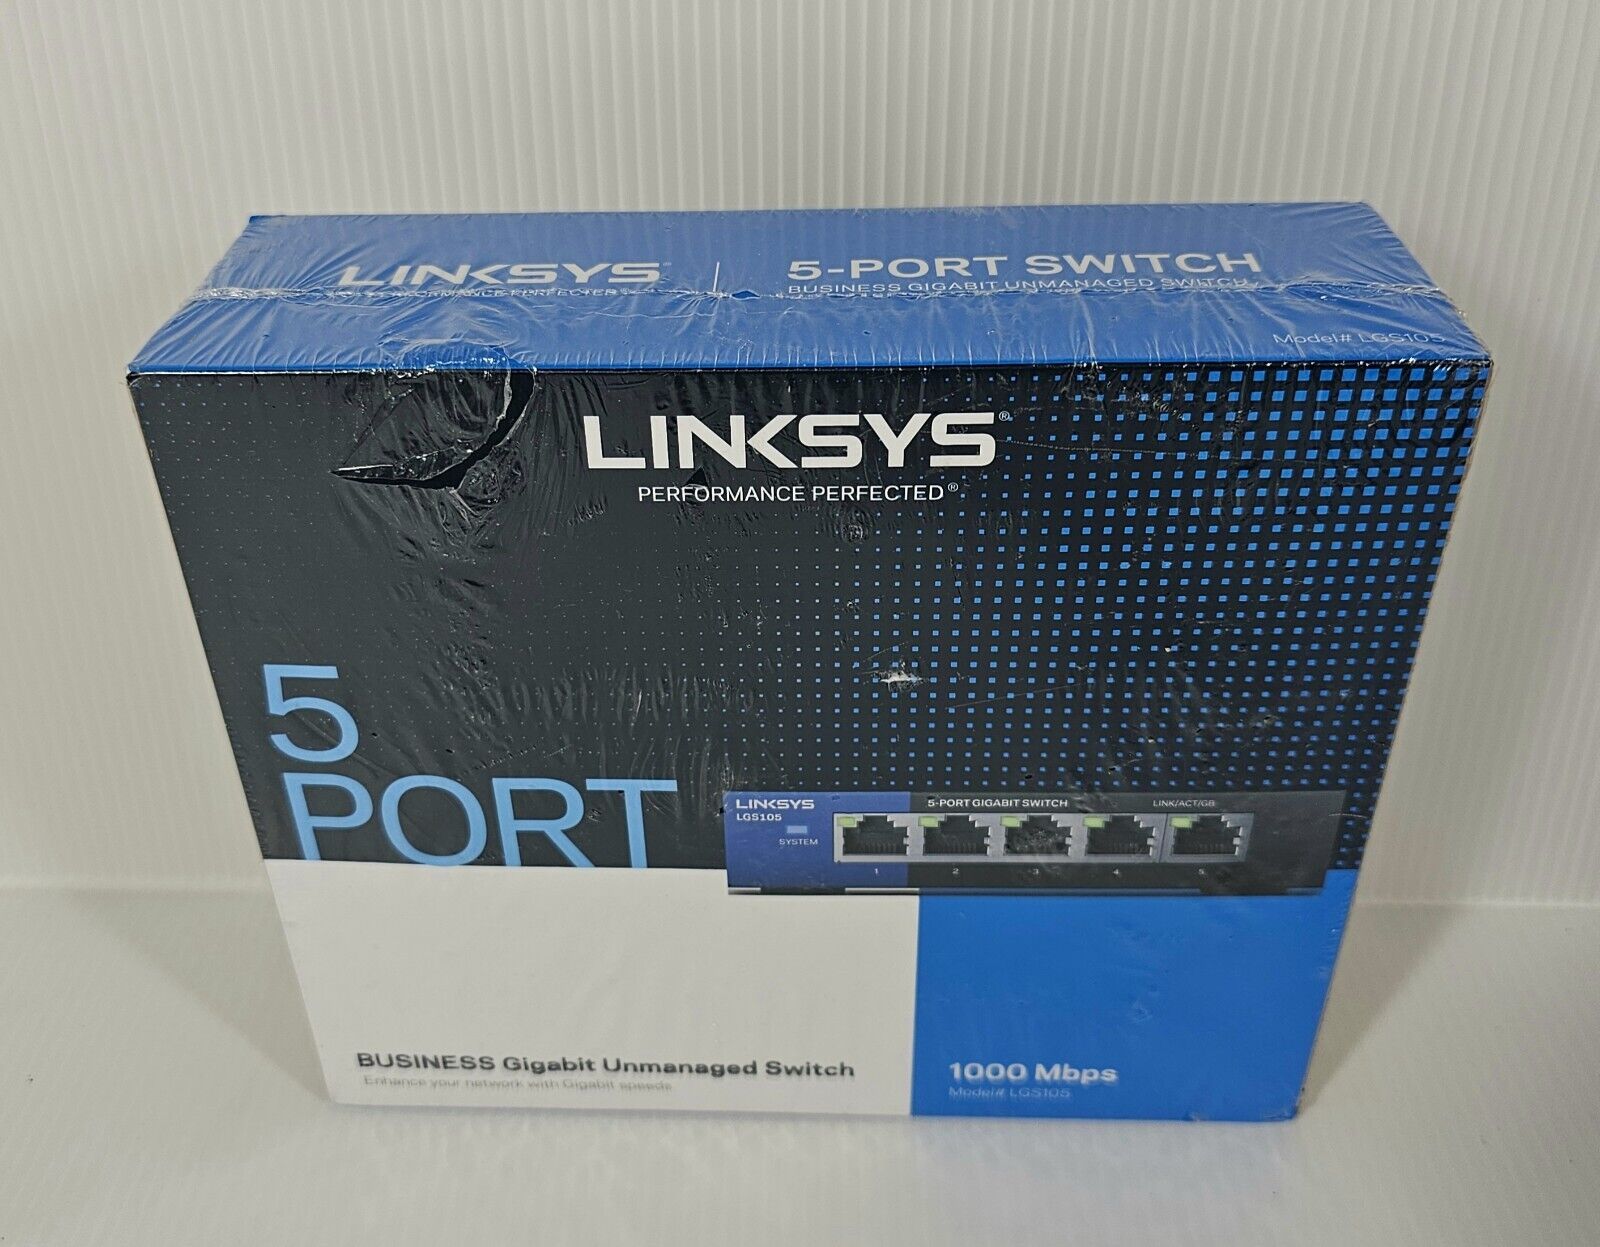 Linksys 5-Port Business Gigabit Switch LGS105, 1000 Mbps, BRAND NEW SEALED 